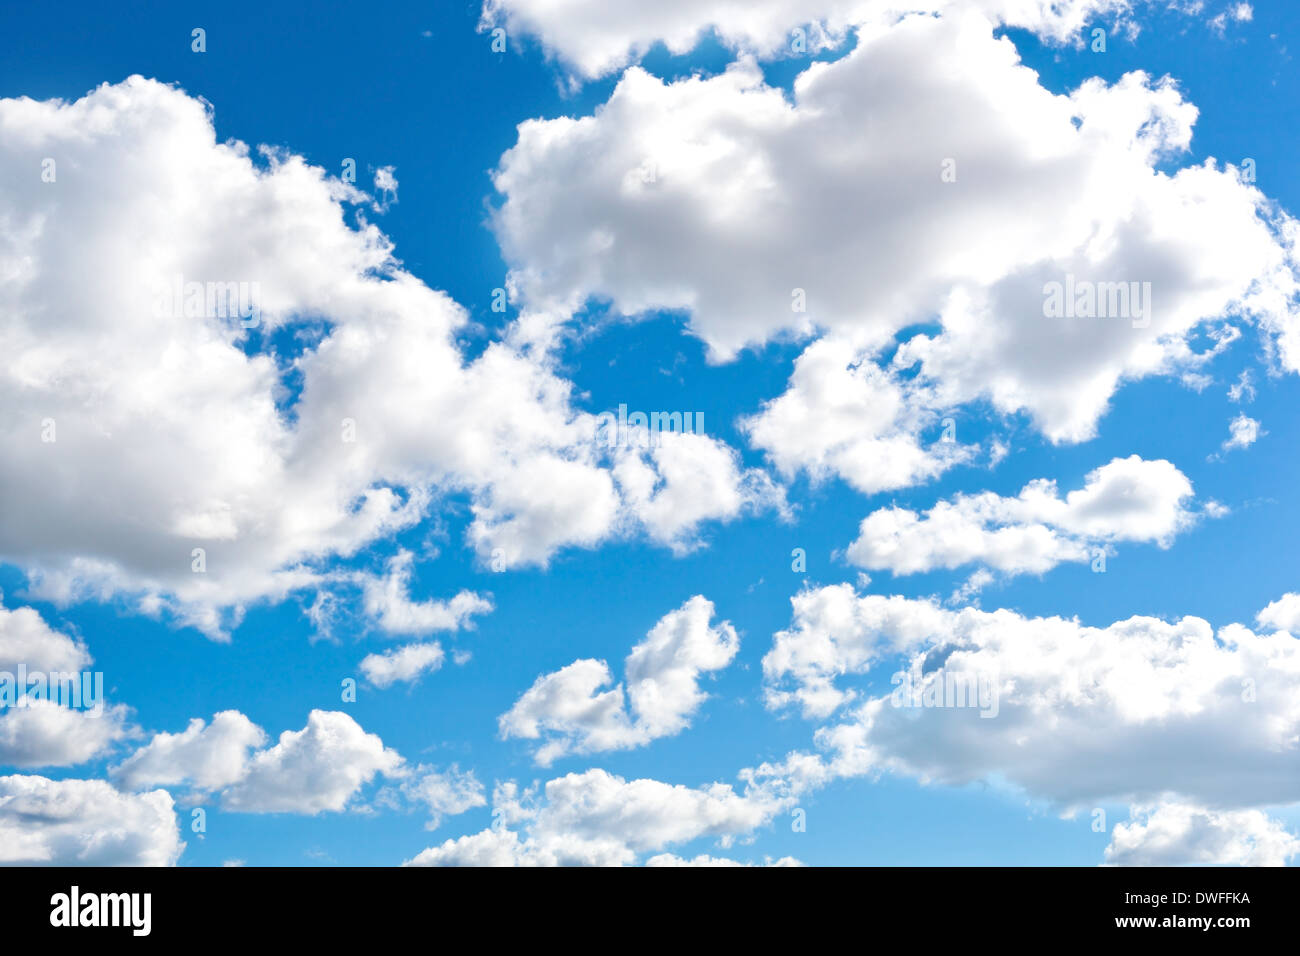 Cloudly Himmelshintergrund Stockfoto